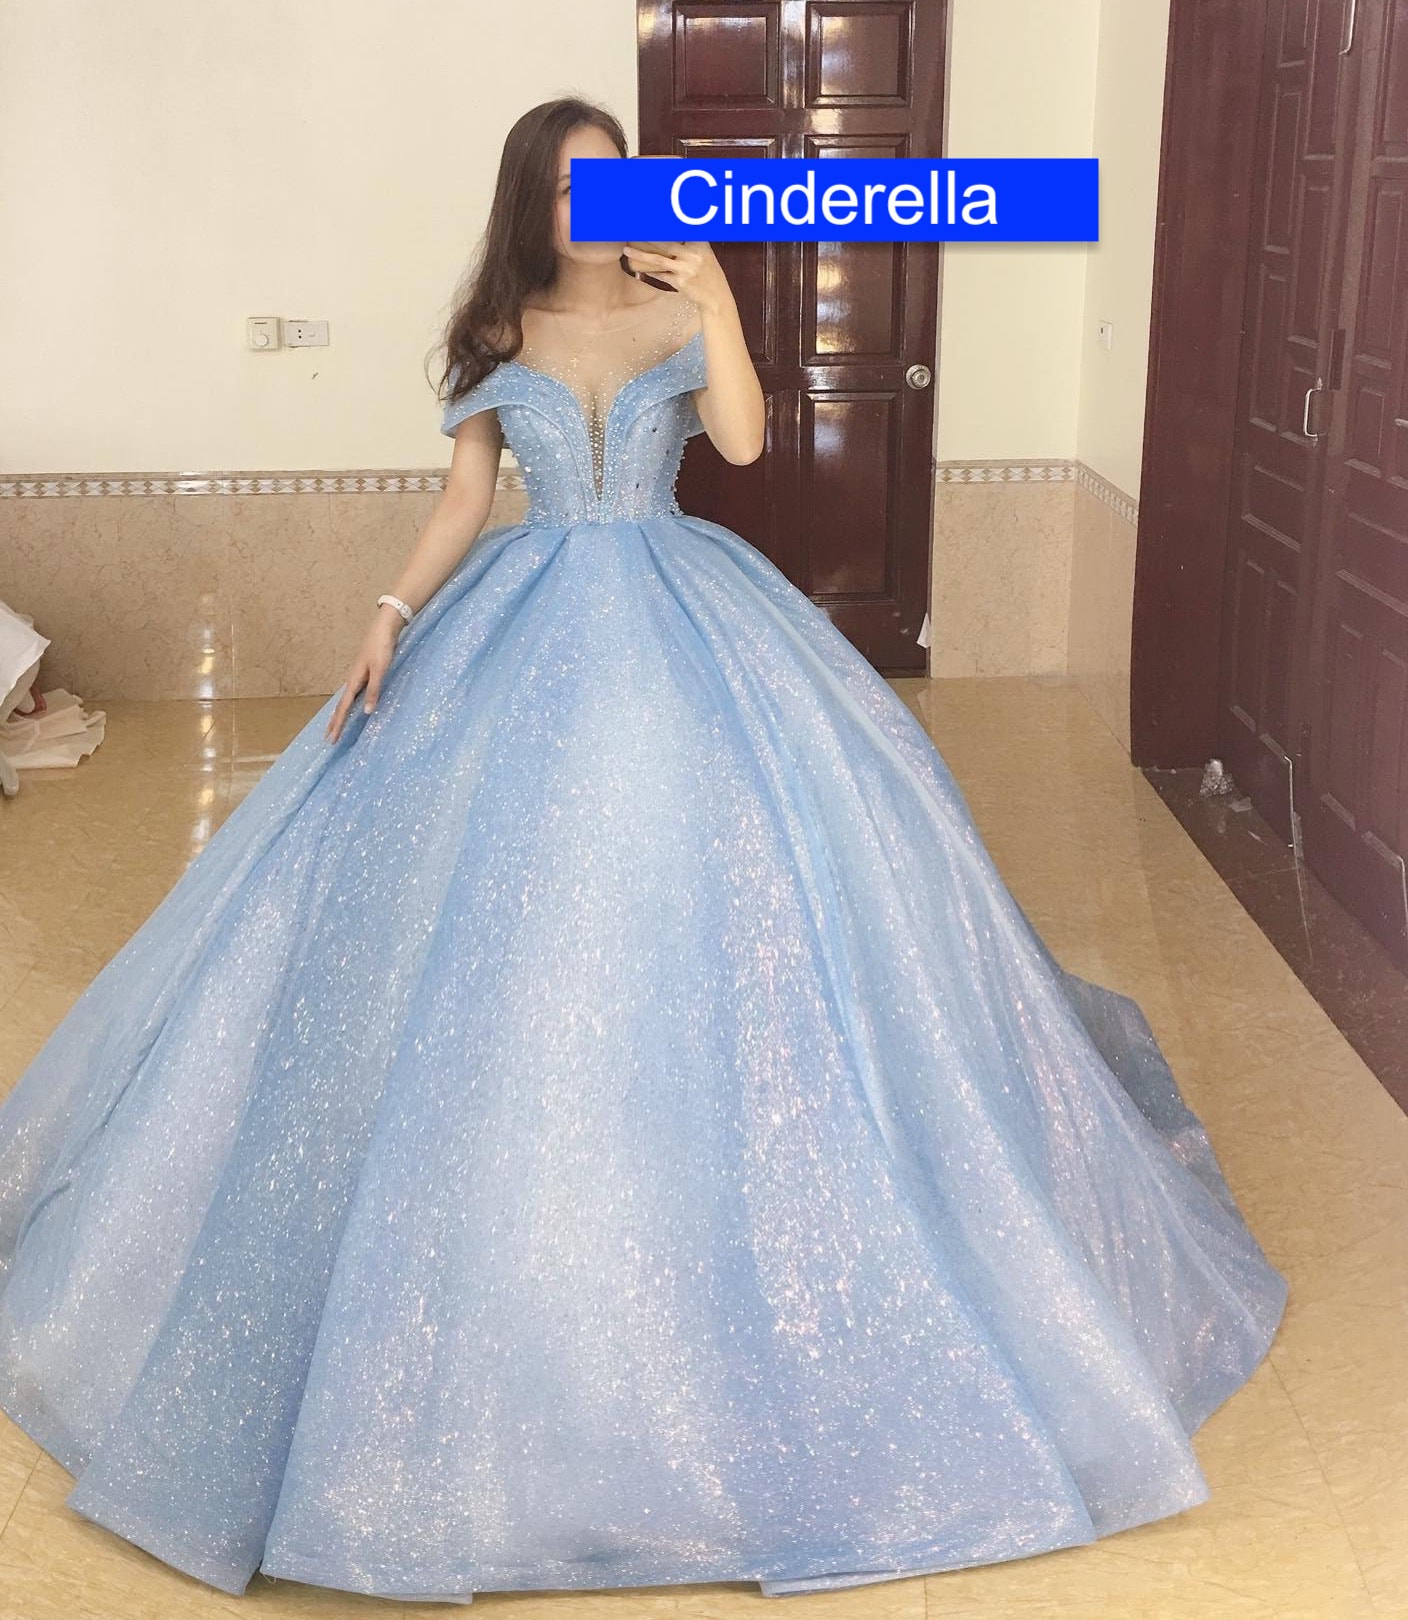 cinderella inspired gown